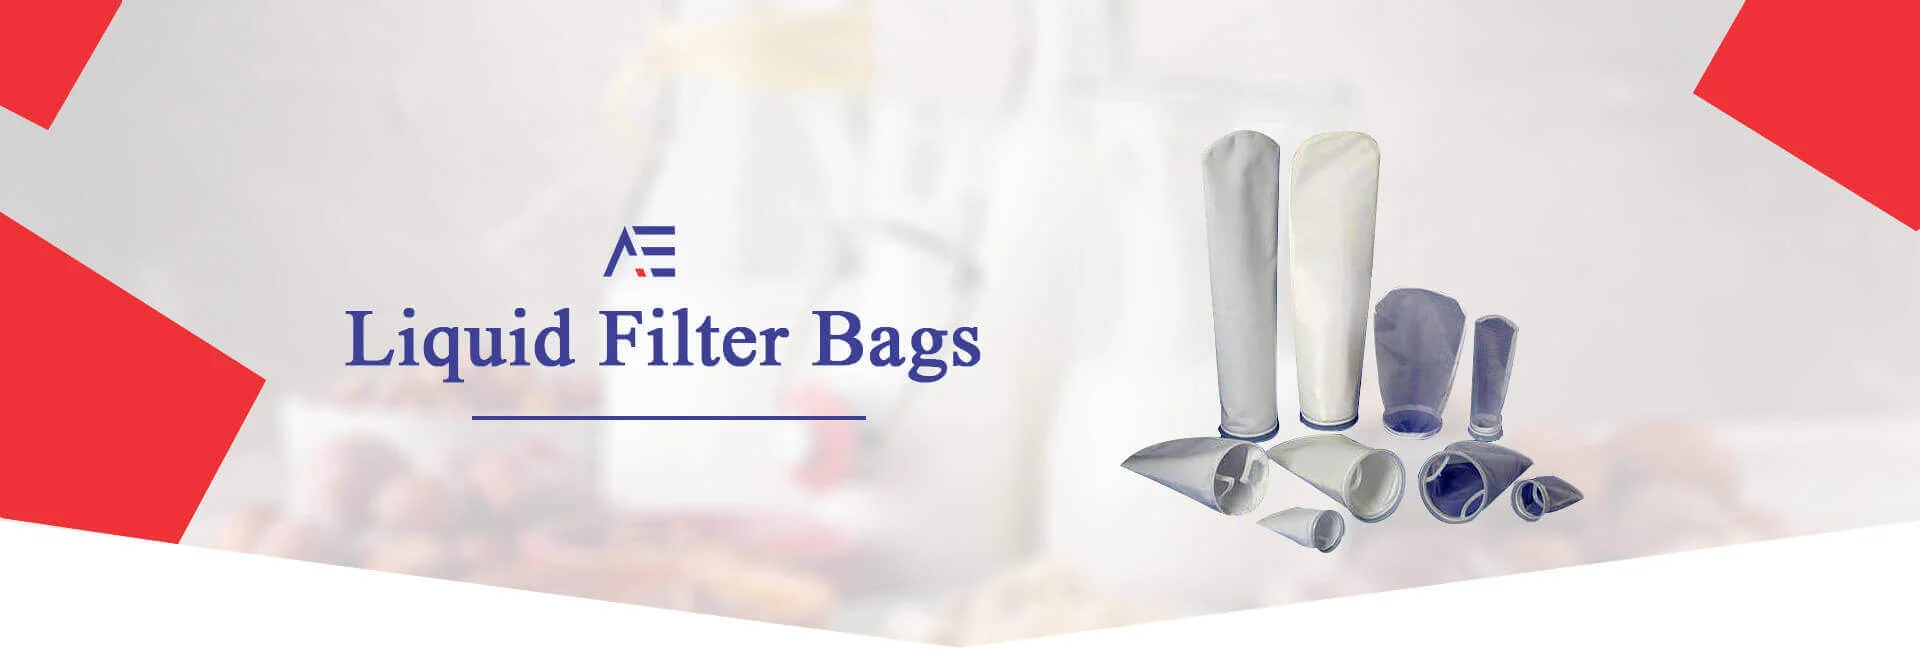 Industrial Filter Bags